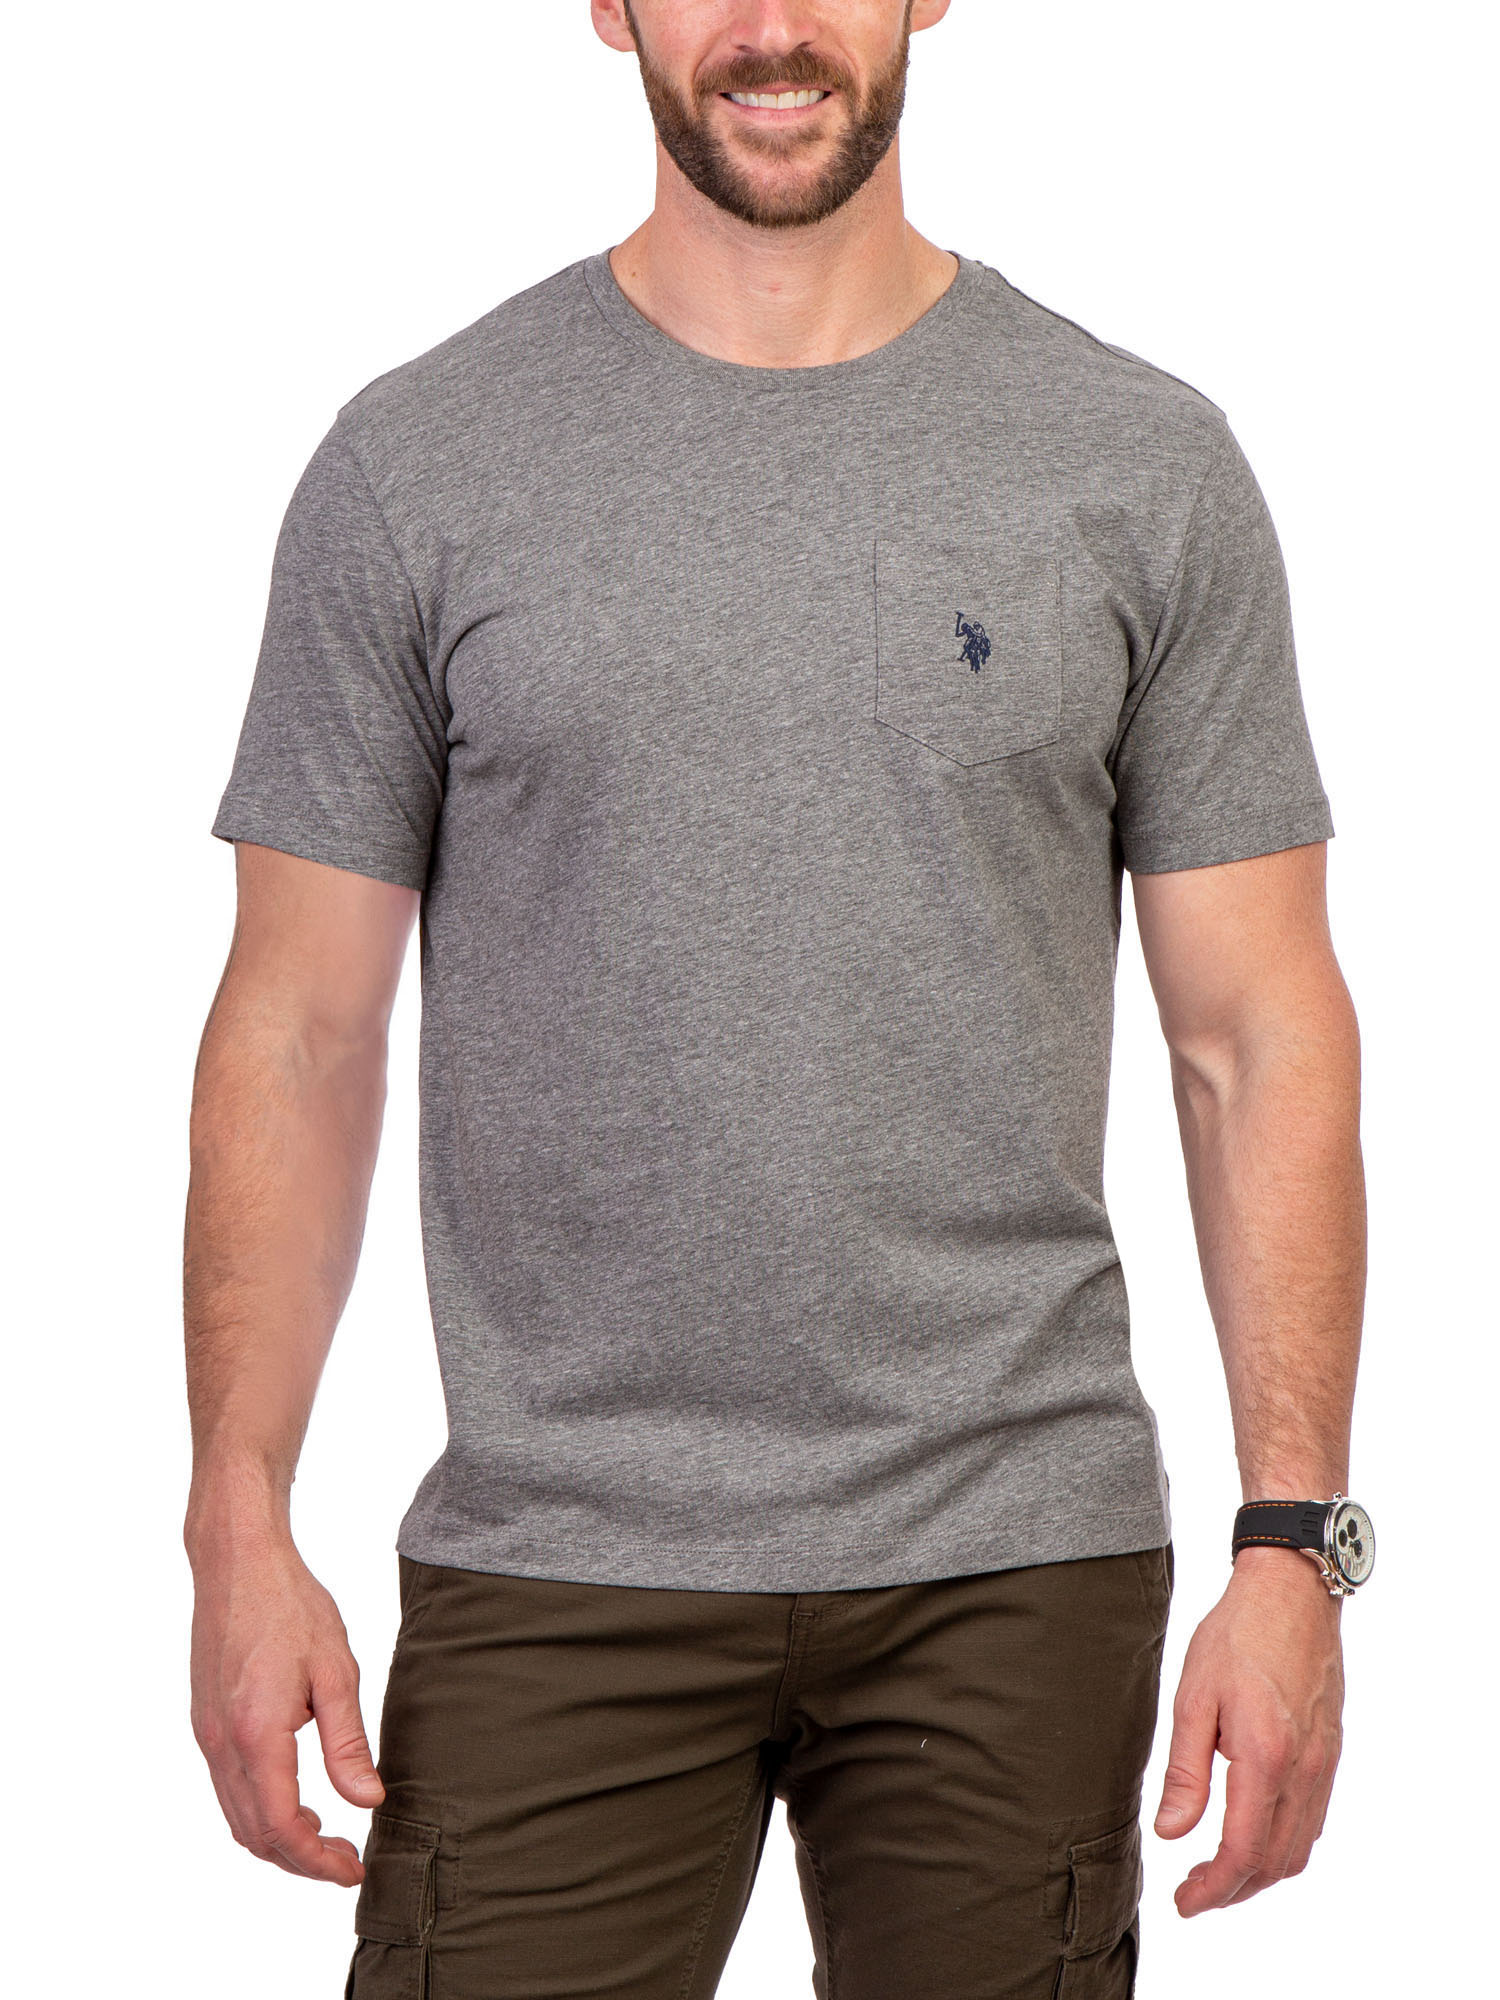 U.S. Polo Assn. Men's Pocket T-Shirt - image 1 of 1